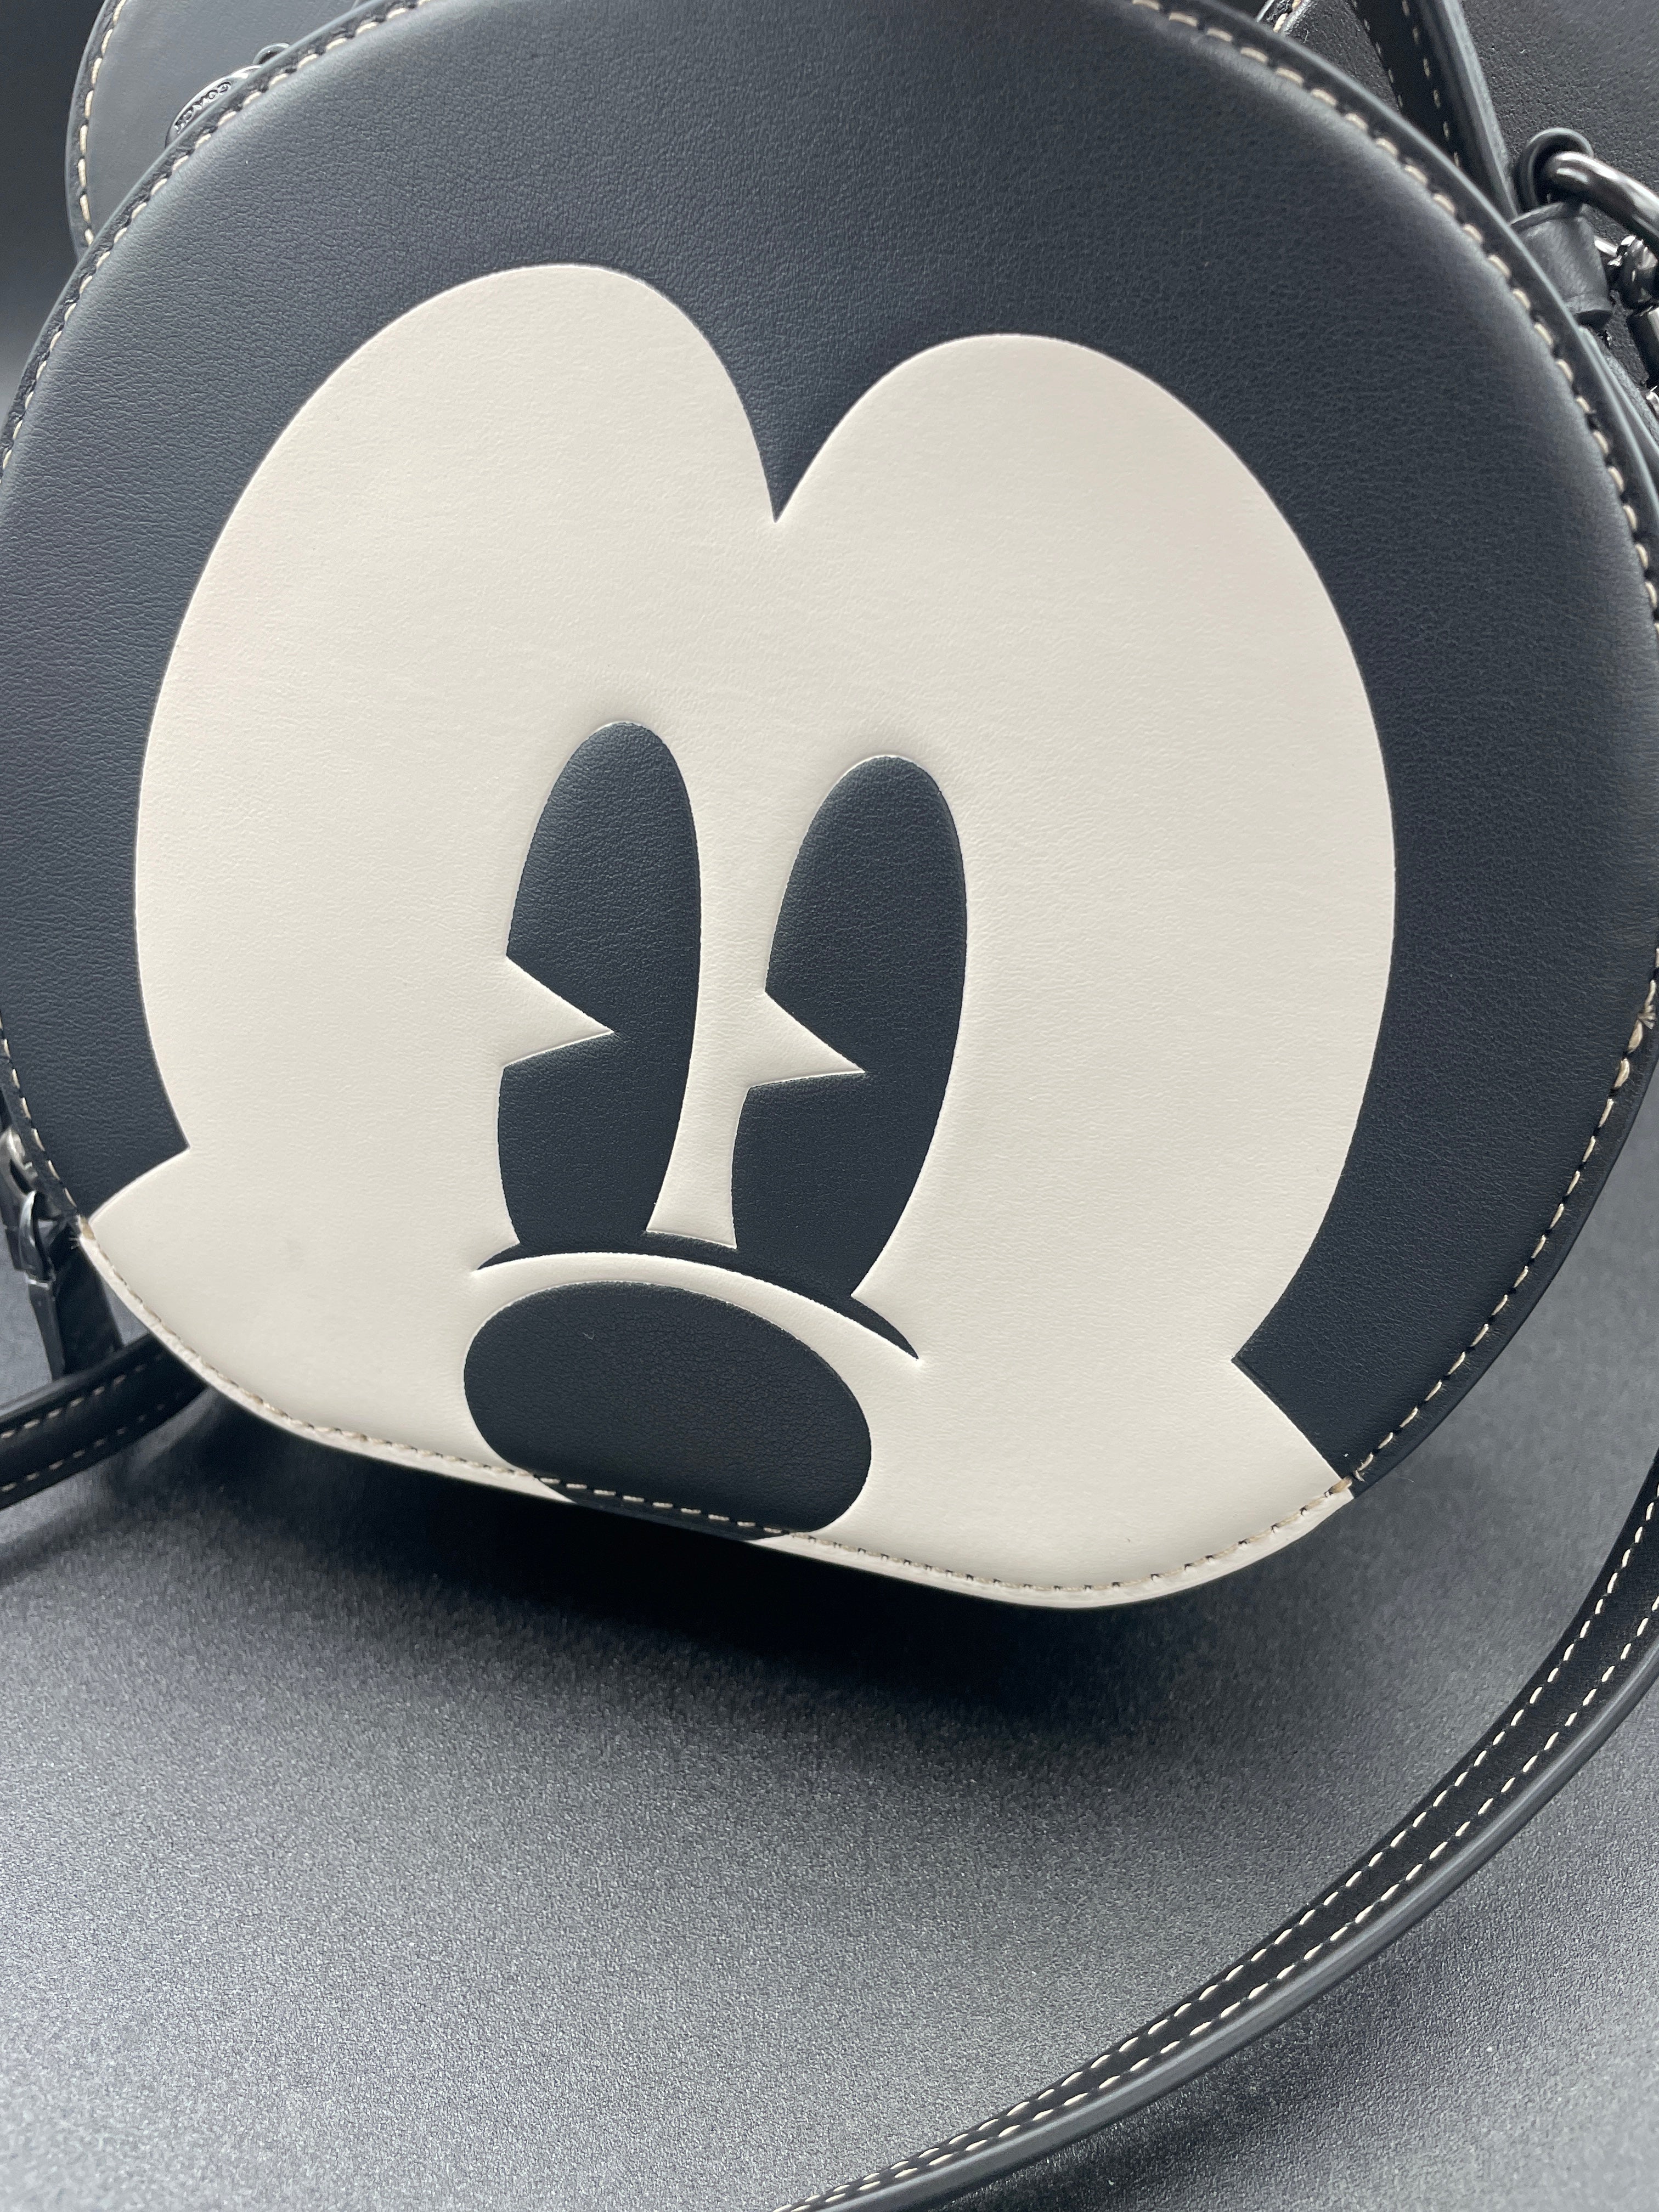 Disney X Coach Mickey Mouse Face Ear Bag